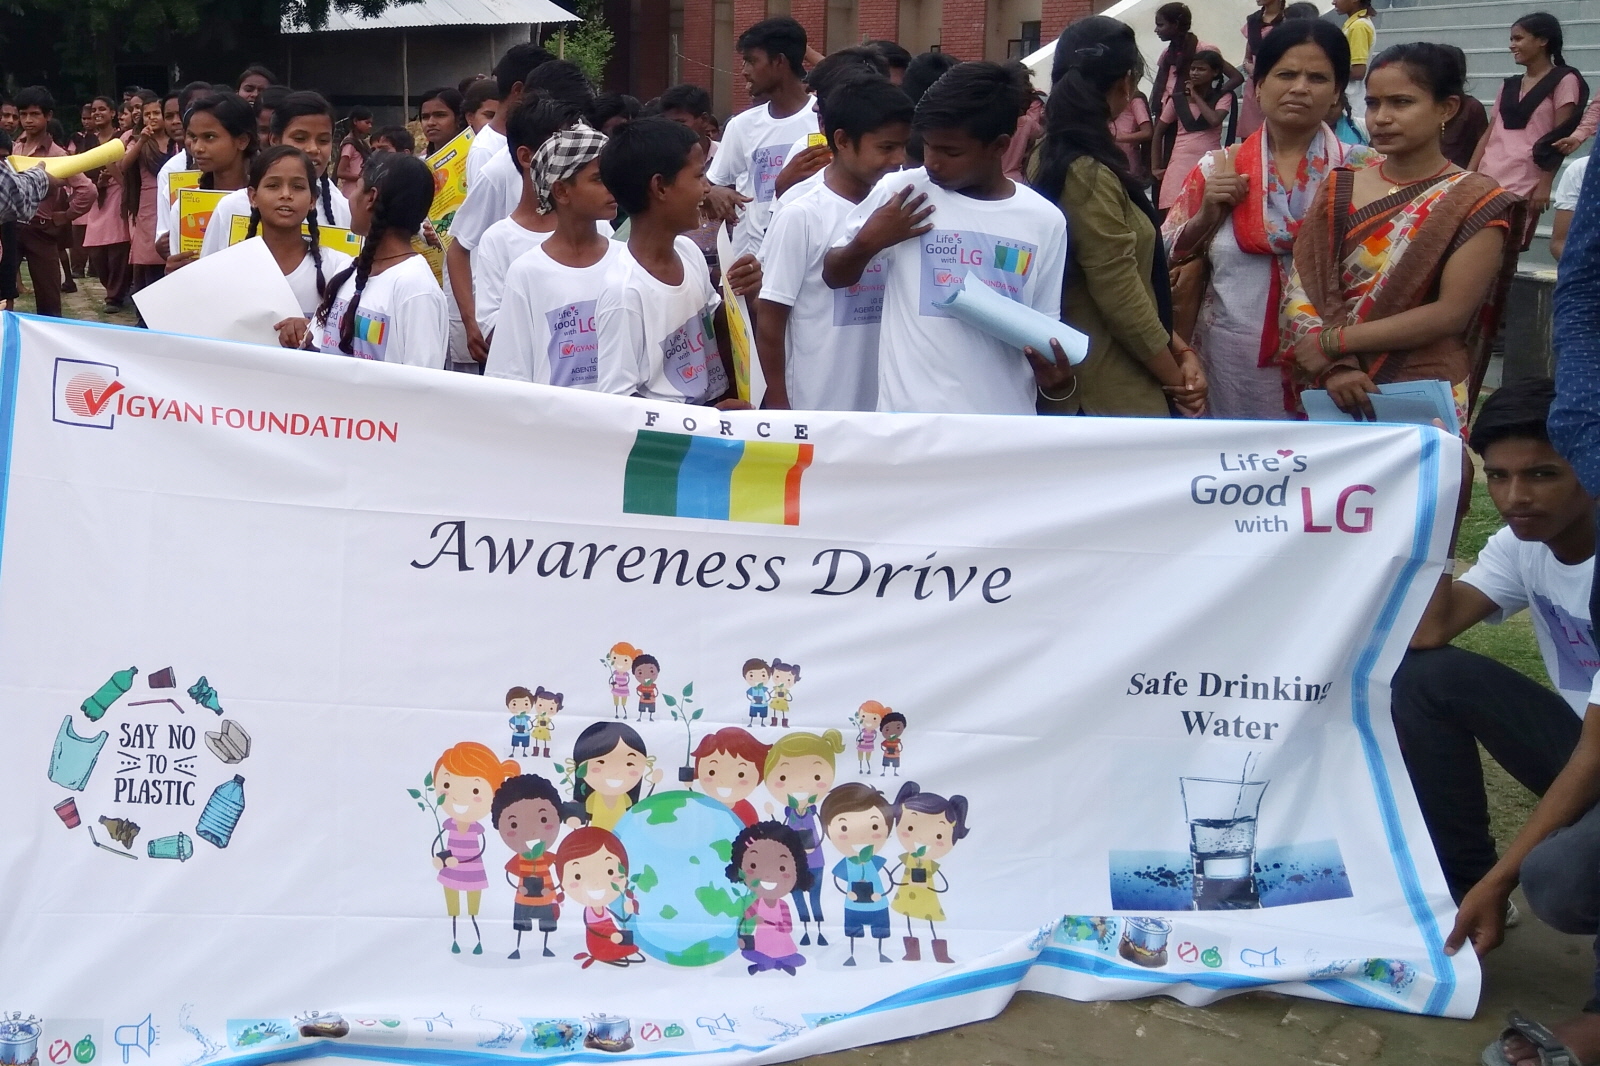 LG전자가 올해 4월부터 인도에서 환경 보호의 중요성을 알리기 위한 ‘LG Agent of Change’ 캠페인을 진행하고 있다. 인도 청소년들이 학교 밖에서 환경보호의 중요성을 알리는 캠페인을 하고 있다.